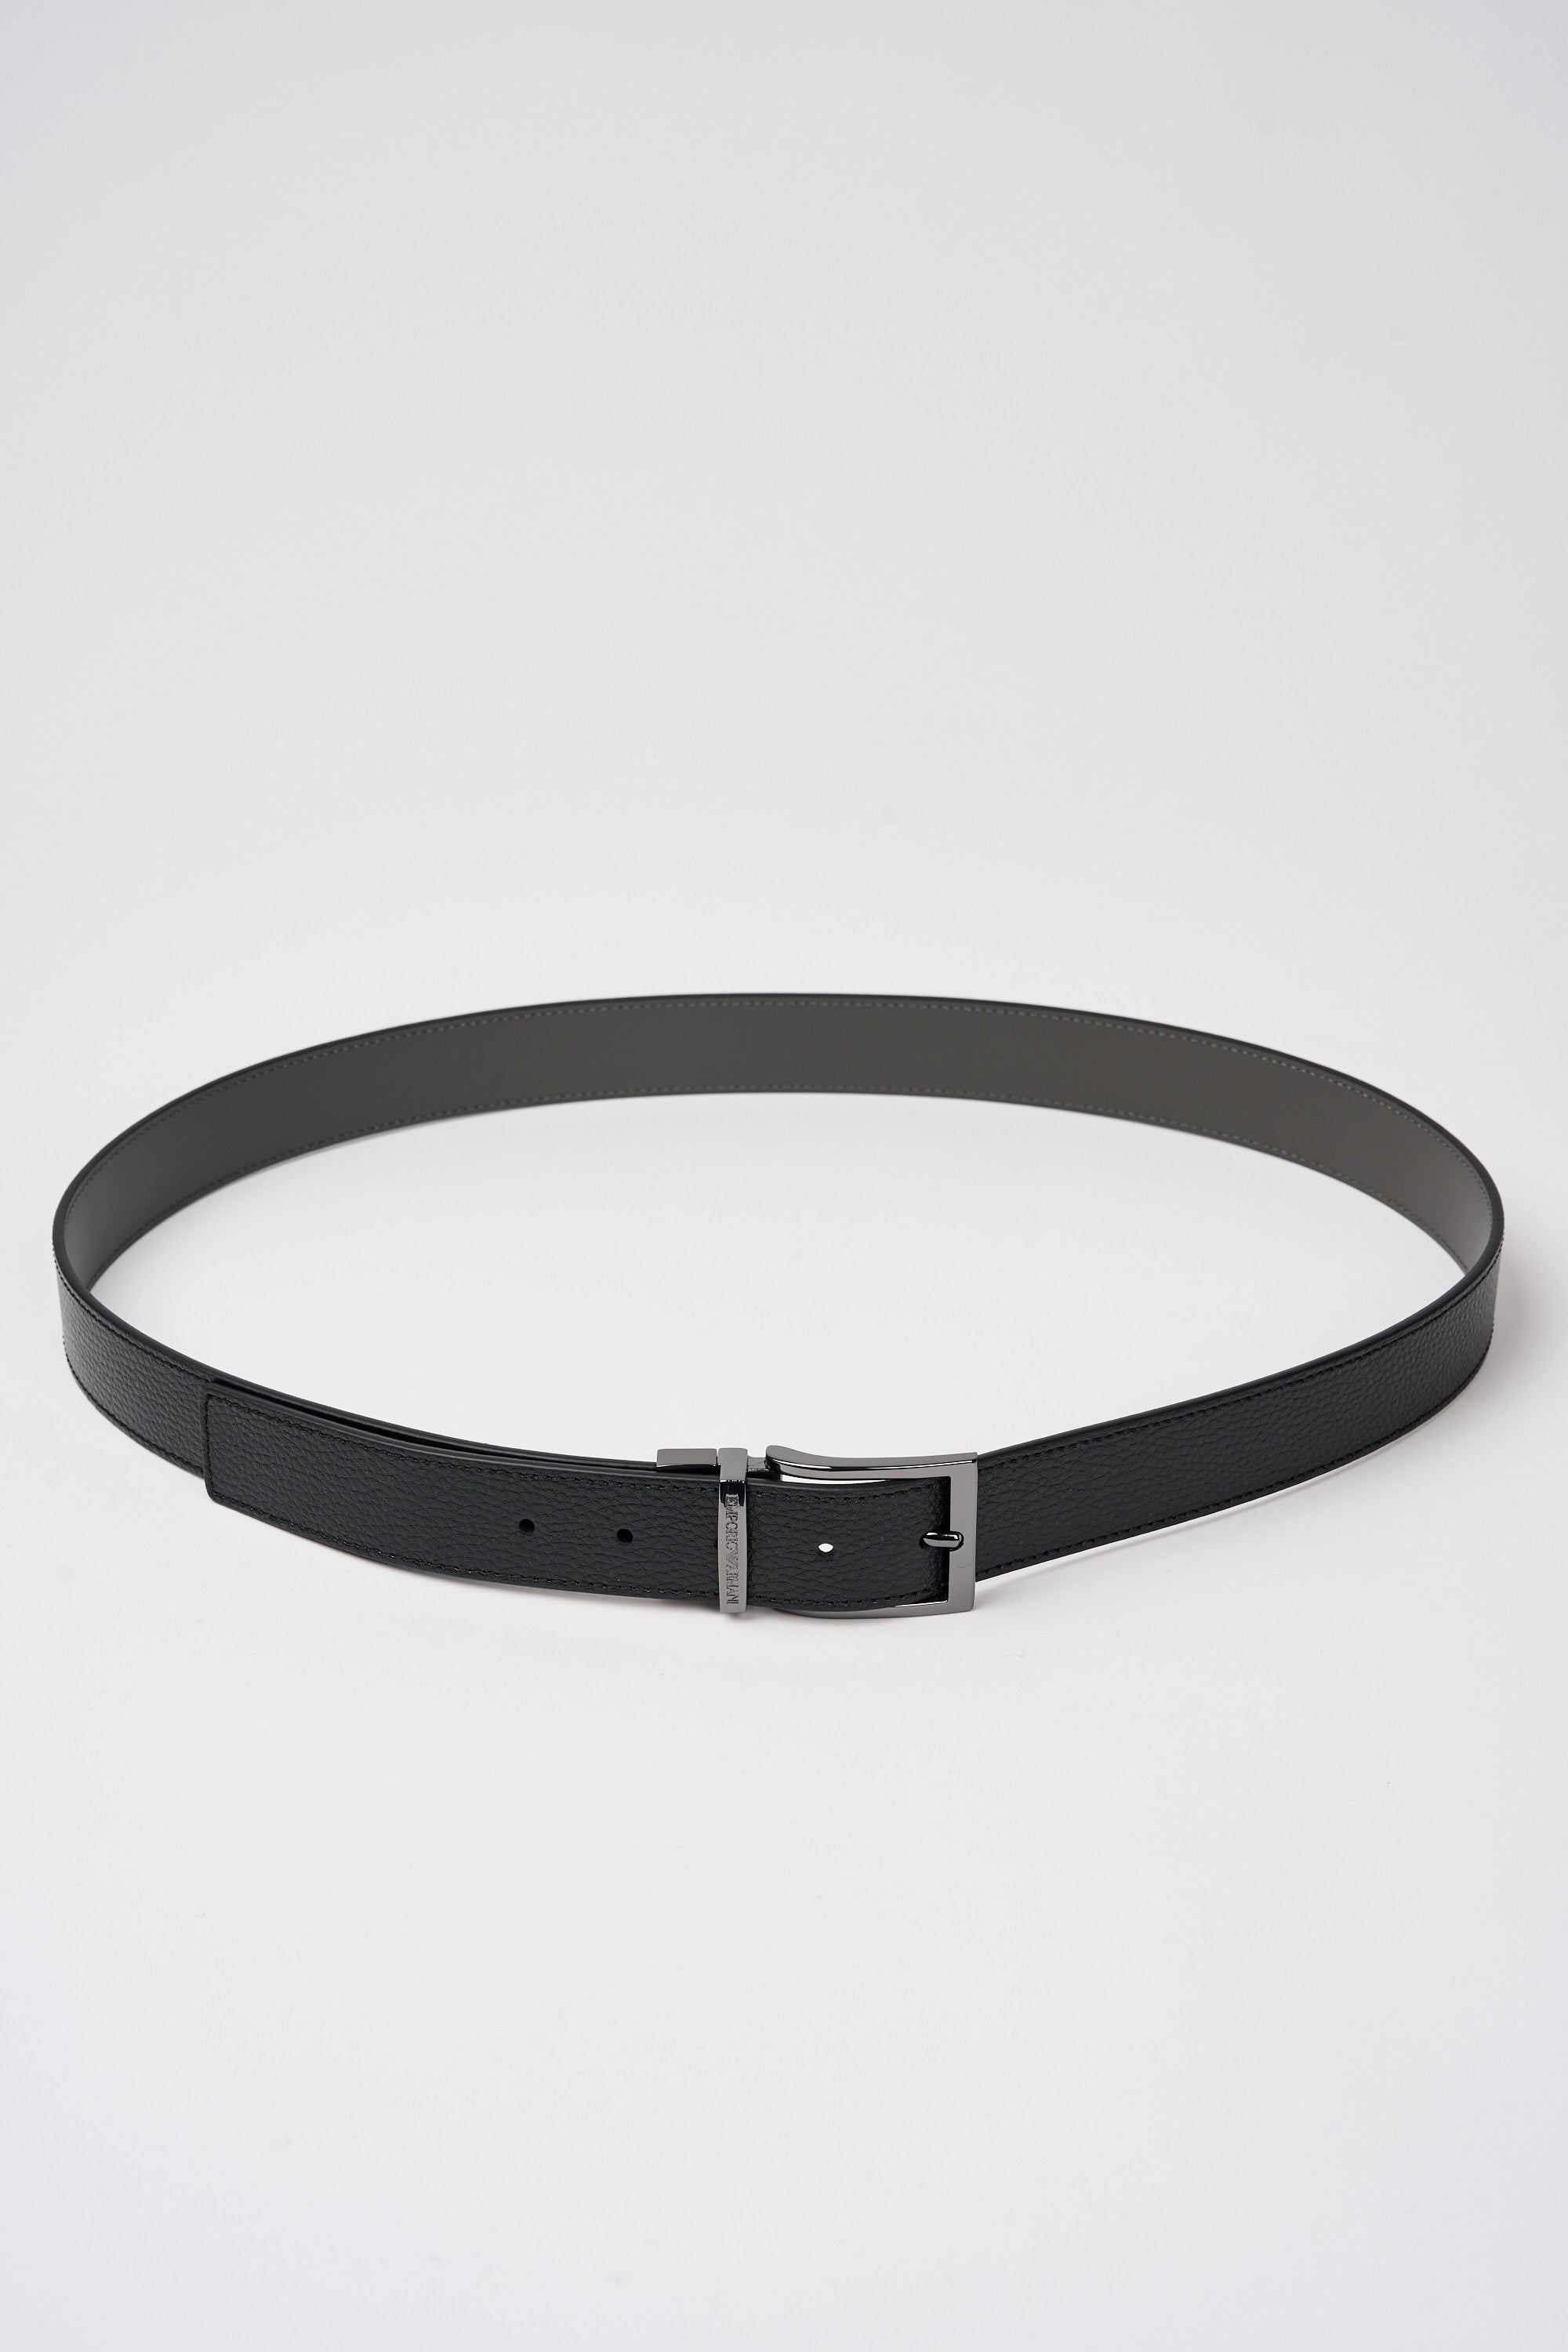 Emporio Armani Black Bovine Leather Belt-2